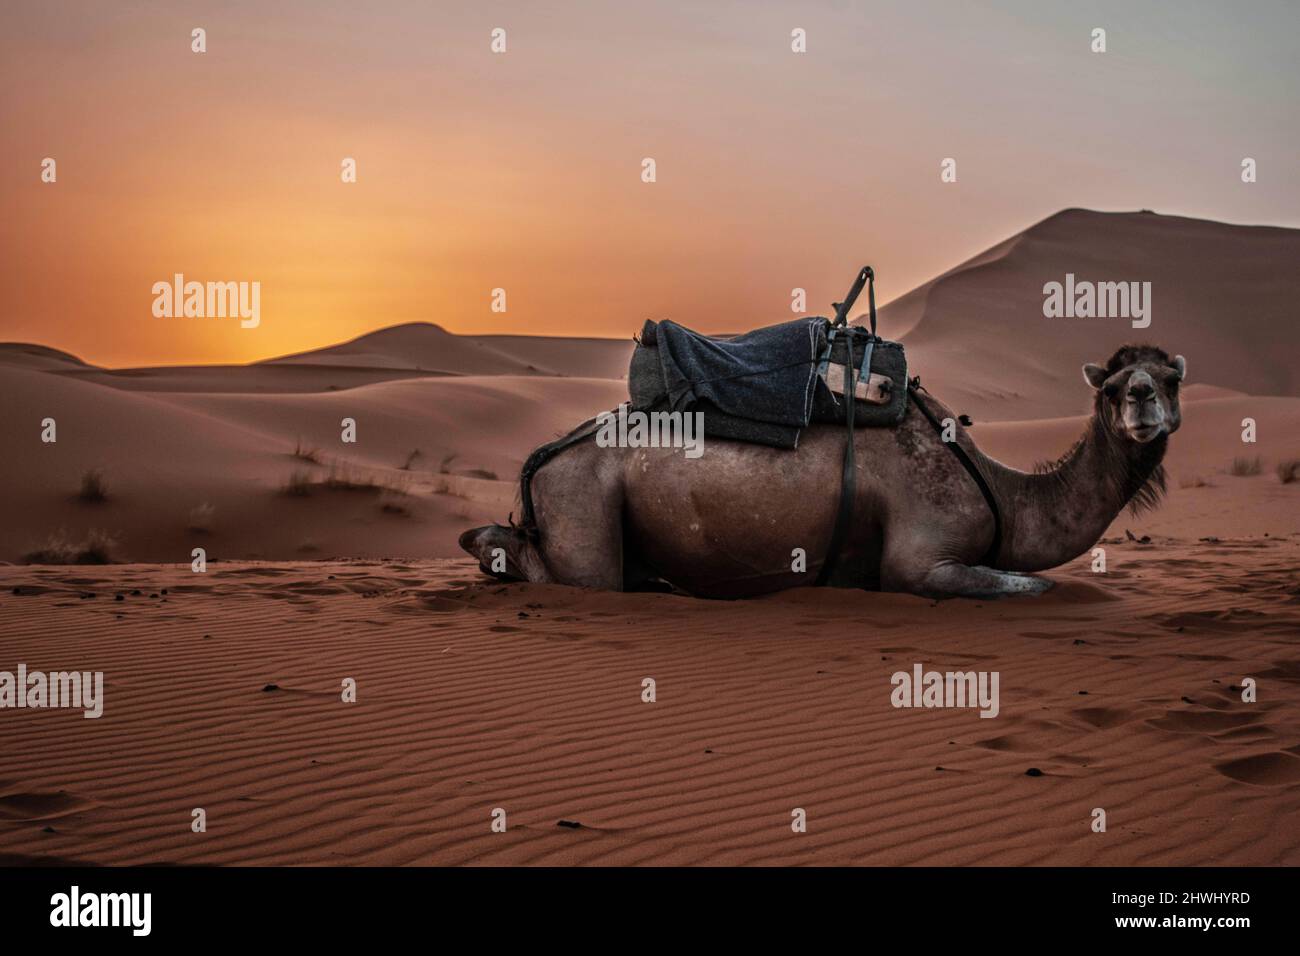 Camel Dromedary animal in Sahara Desert with sunset and sand dunes Stock Photo